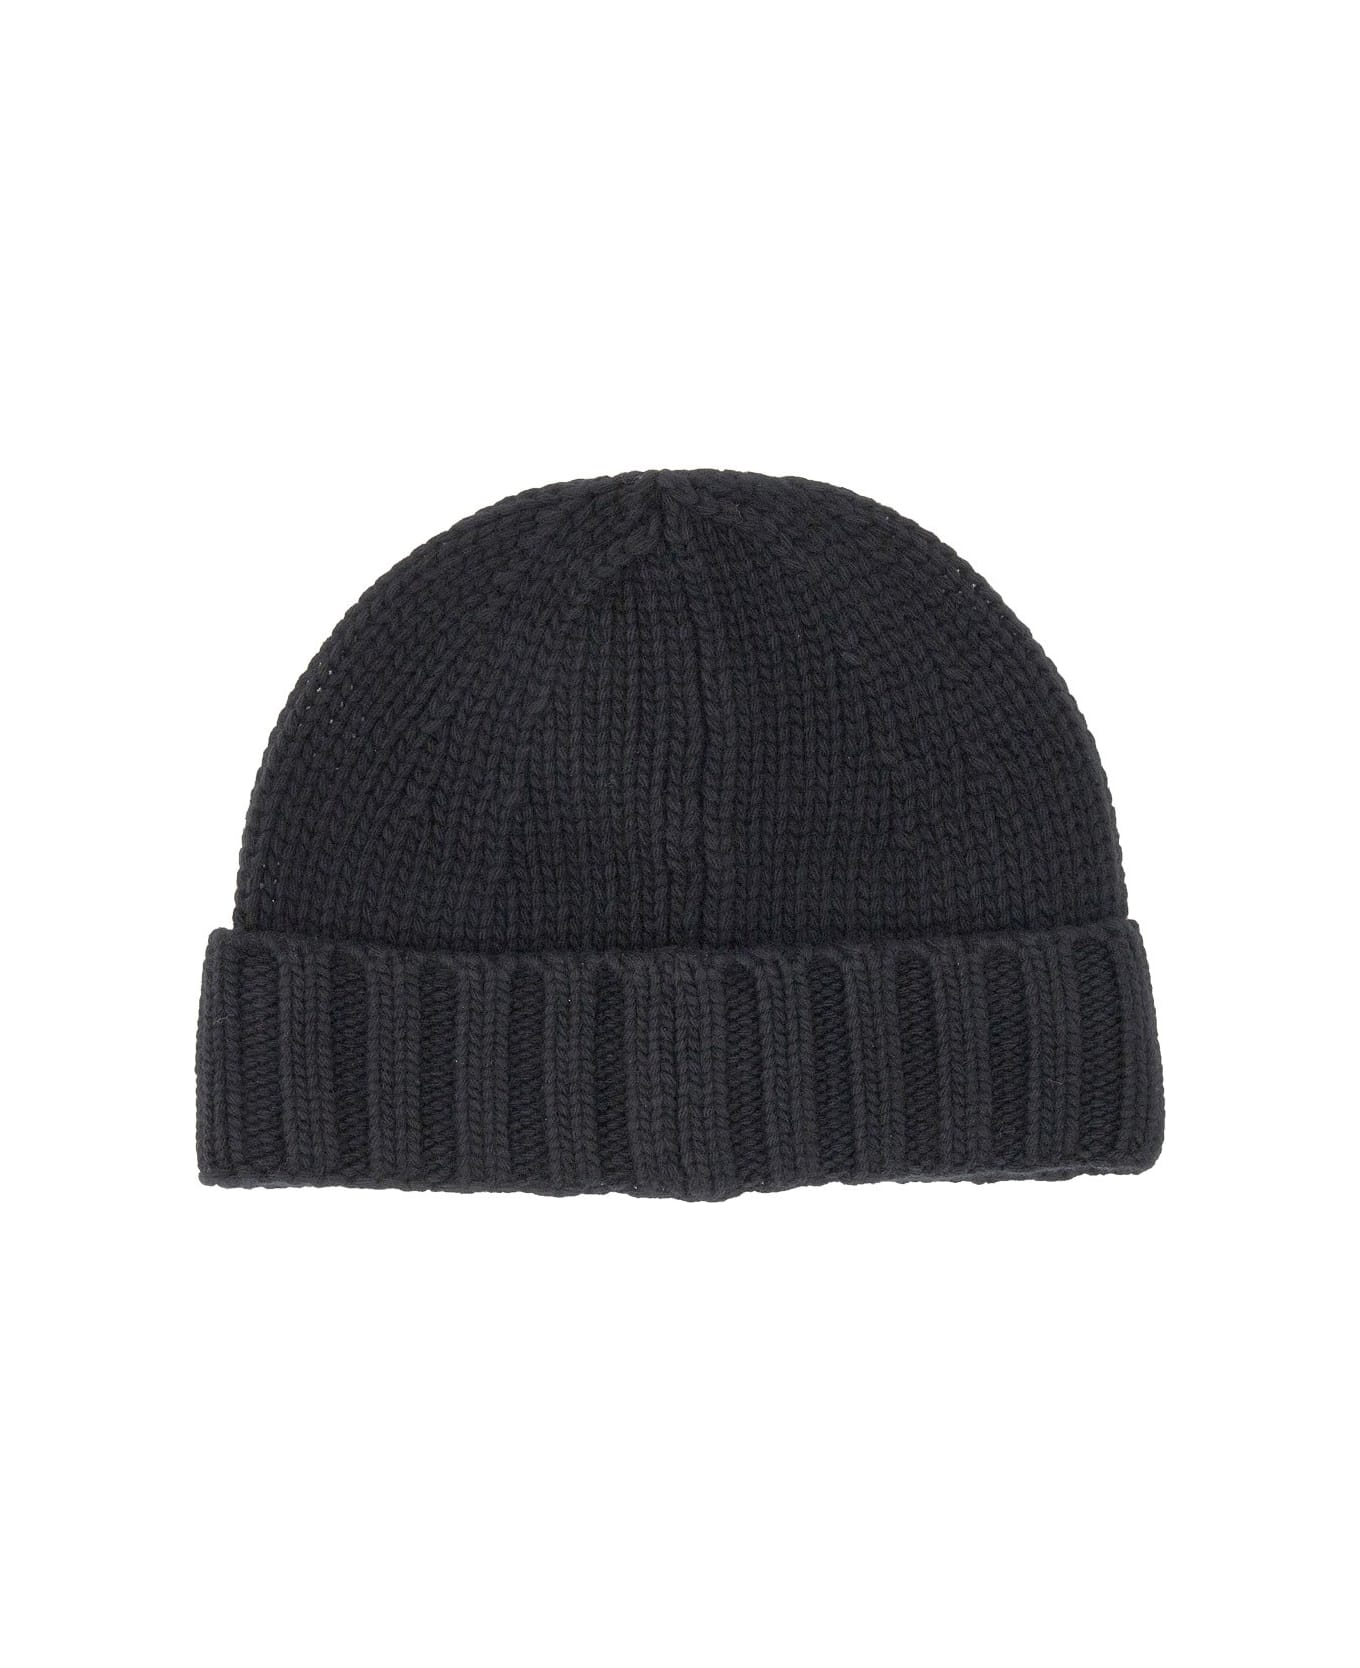 Stone Island Knitted Virgin Wool Tribute Hat - black